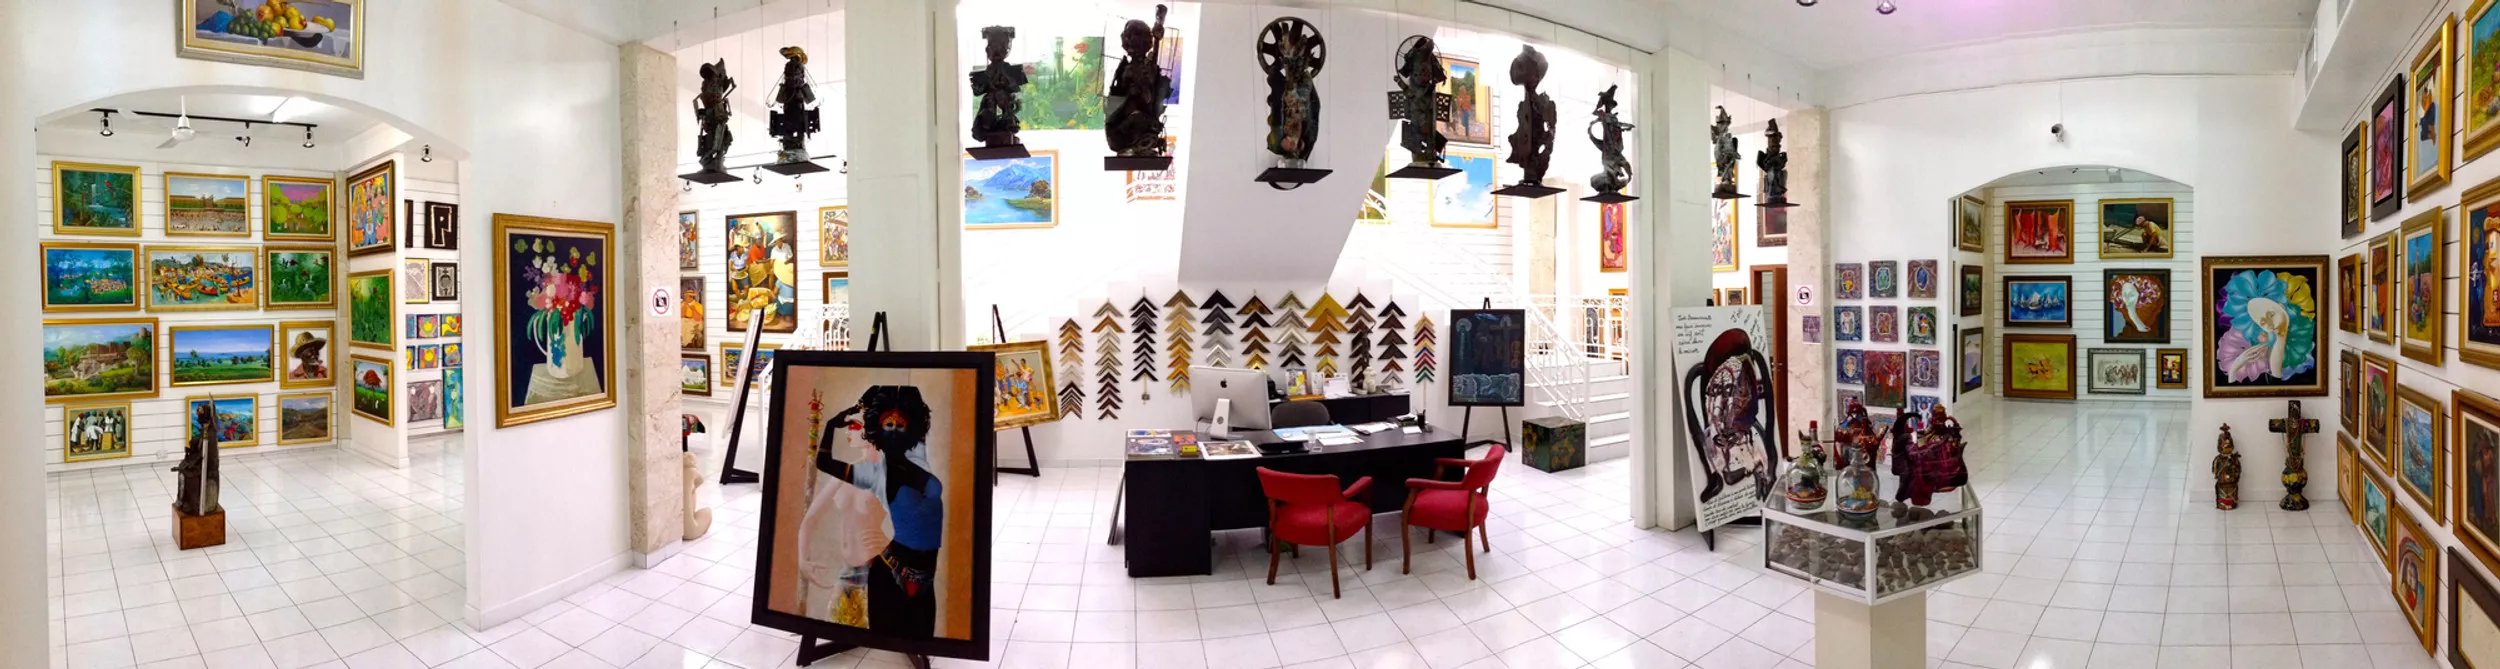 Galerie d'Art Nader in Haiti, Caribbean | Art Galleries - Rated 0.7